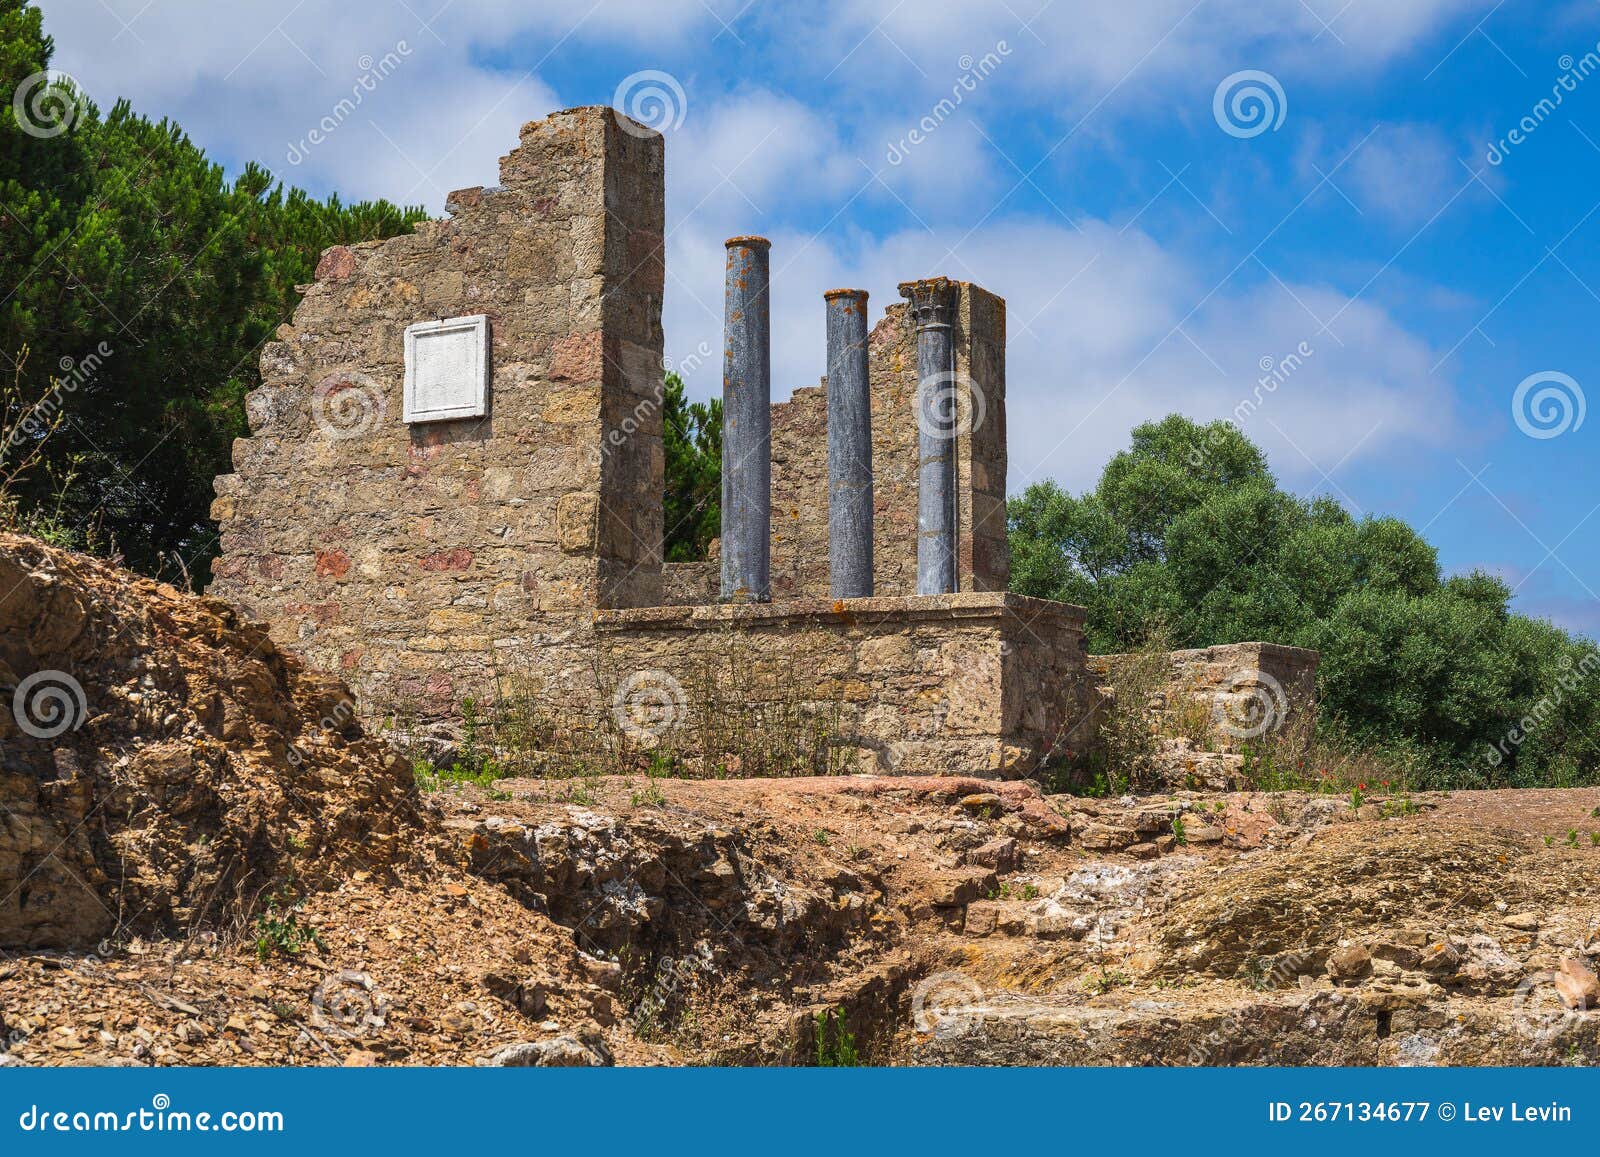 view to the roman ruins of mirobriga